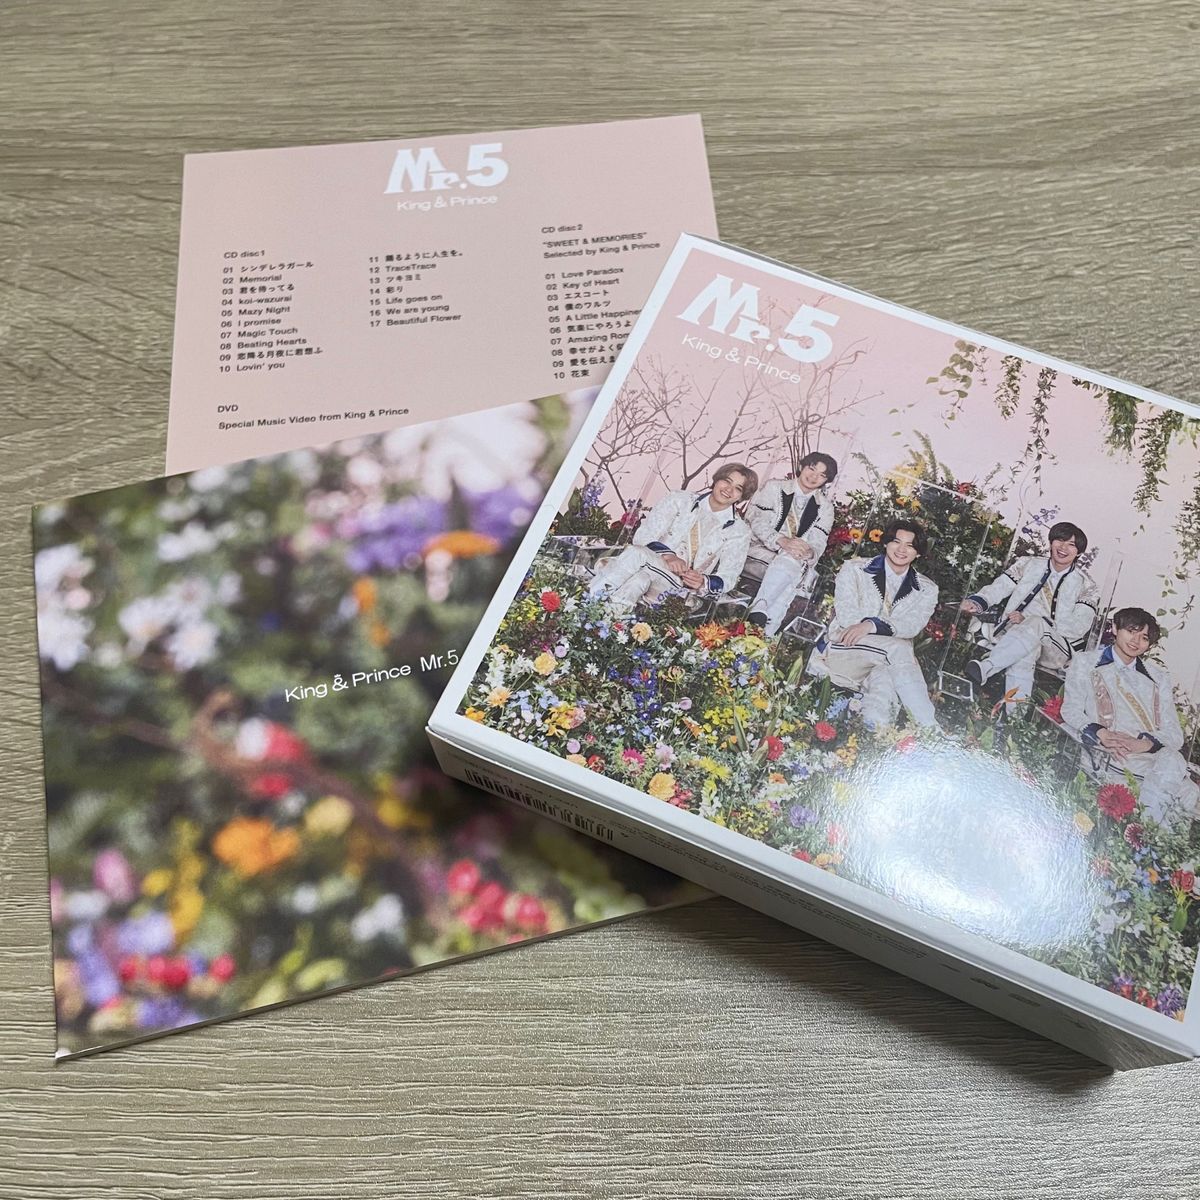 King&Prince キンプリ　Mr.5 キンプリベストアルバム　初回限定盤A 2CD+DVD